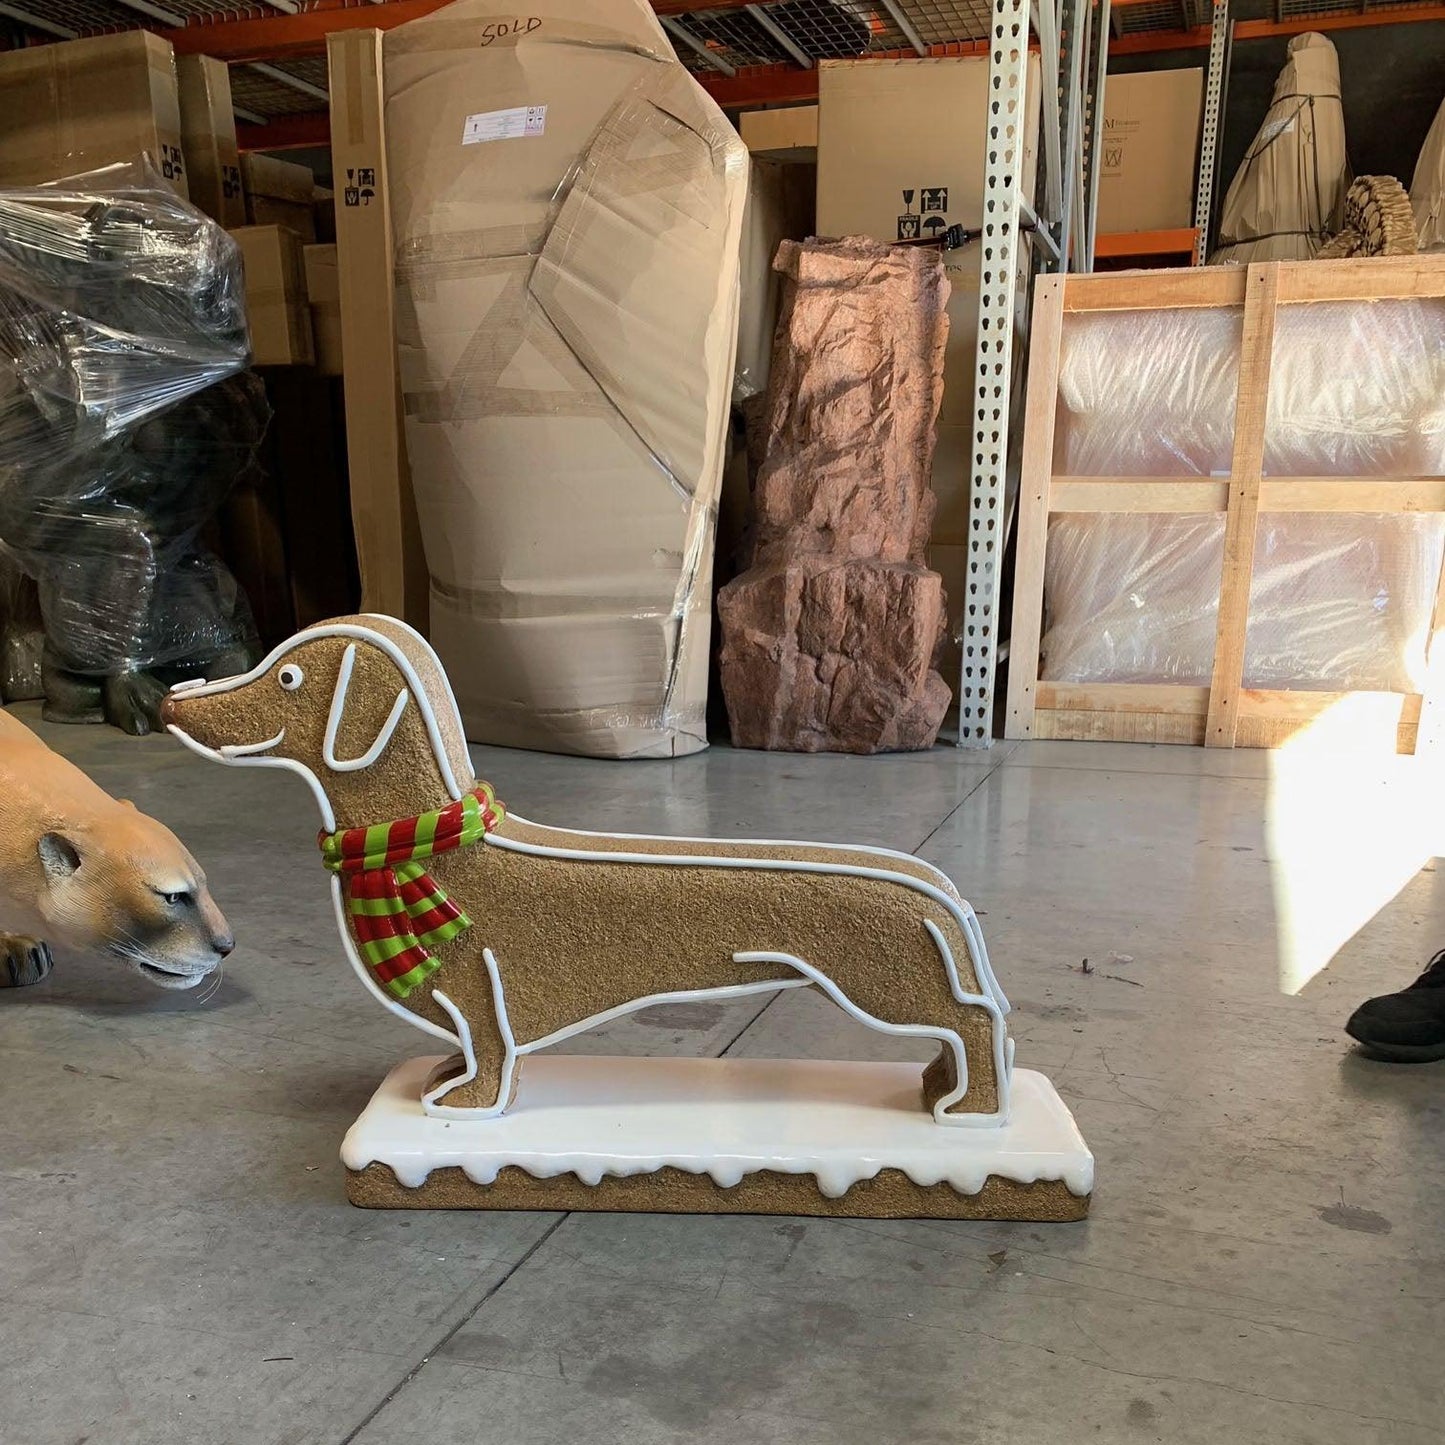 Dog Gingerbread Cookie Statue - LM Treasures Prop Rentals 